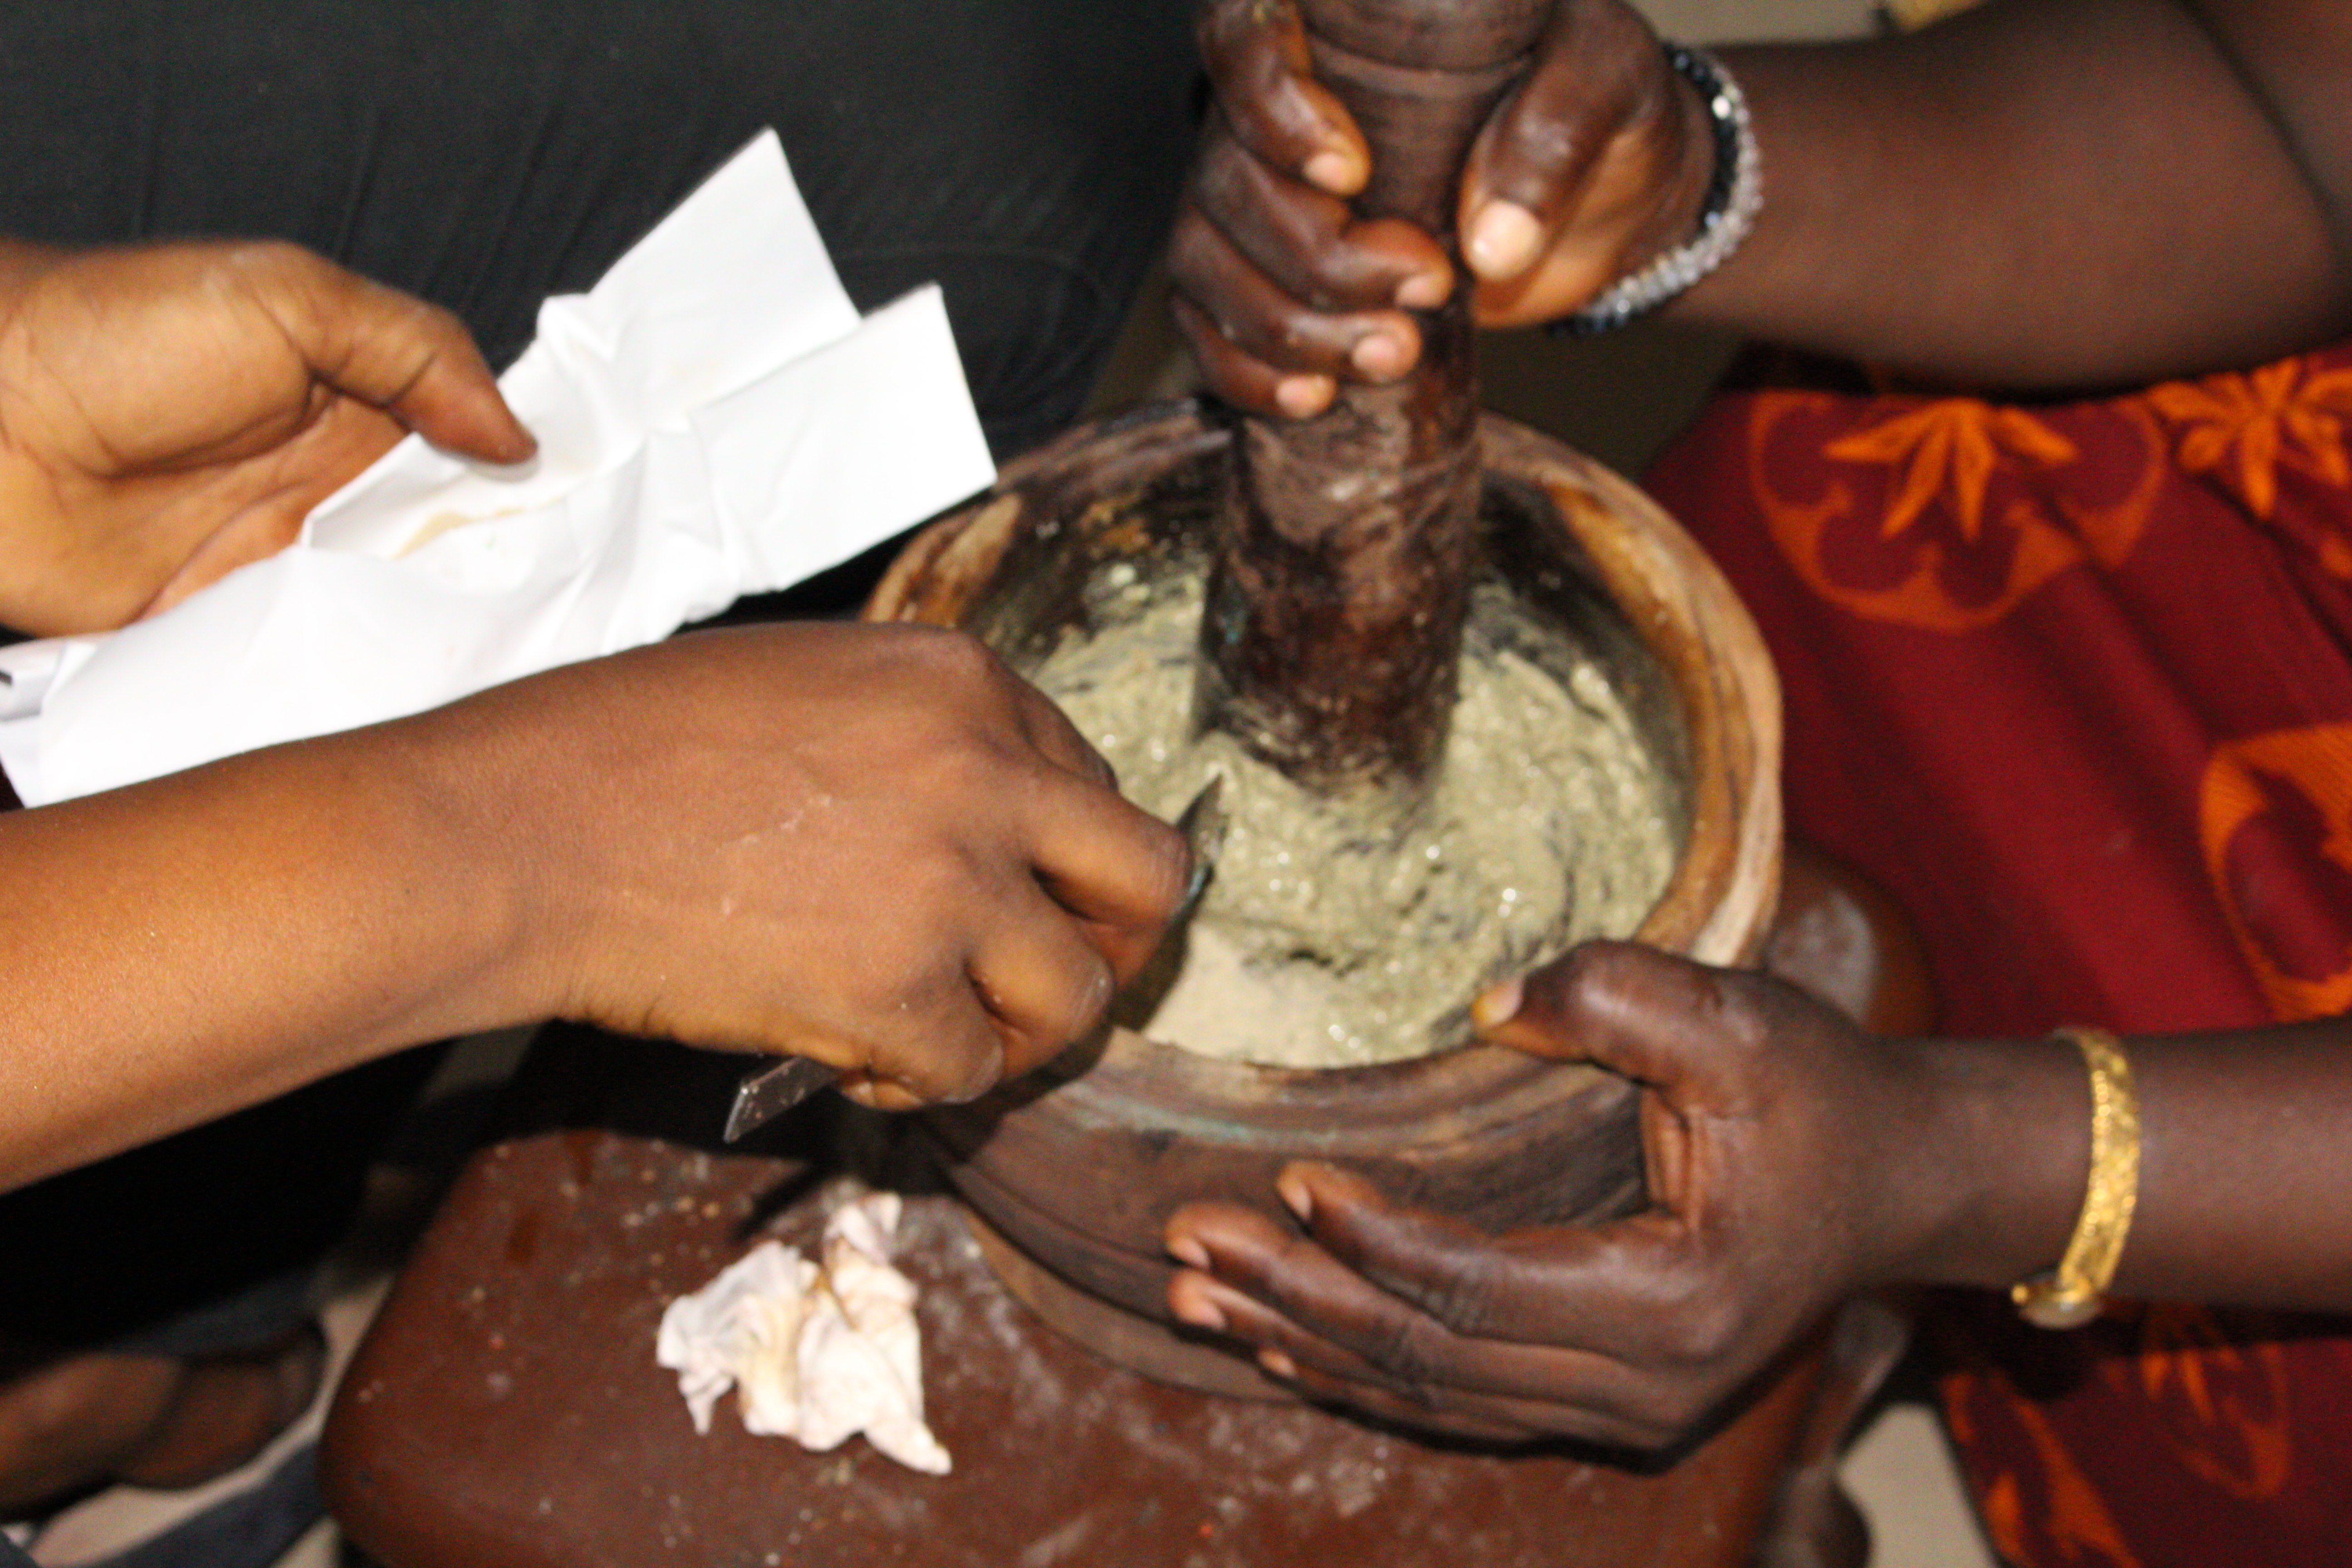 Cakasa Ebenezer trains widows and vulnerable women on life skills